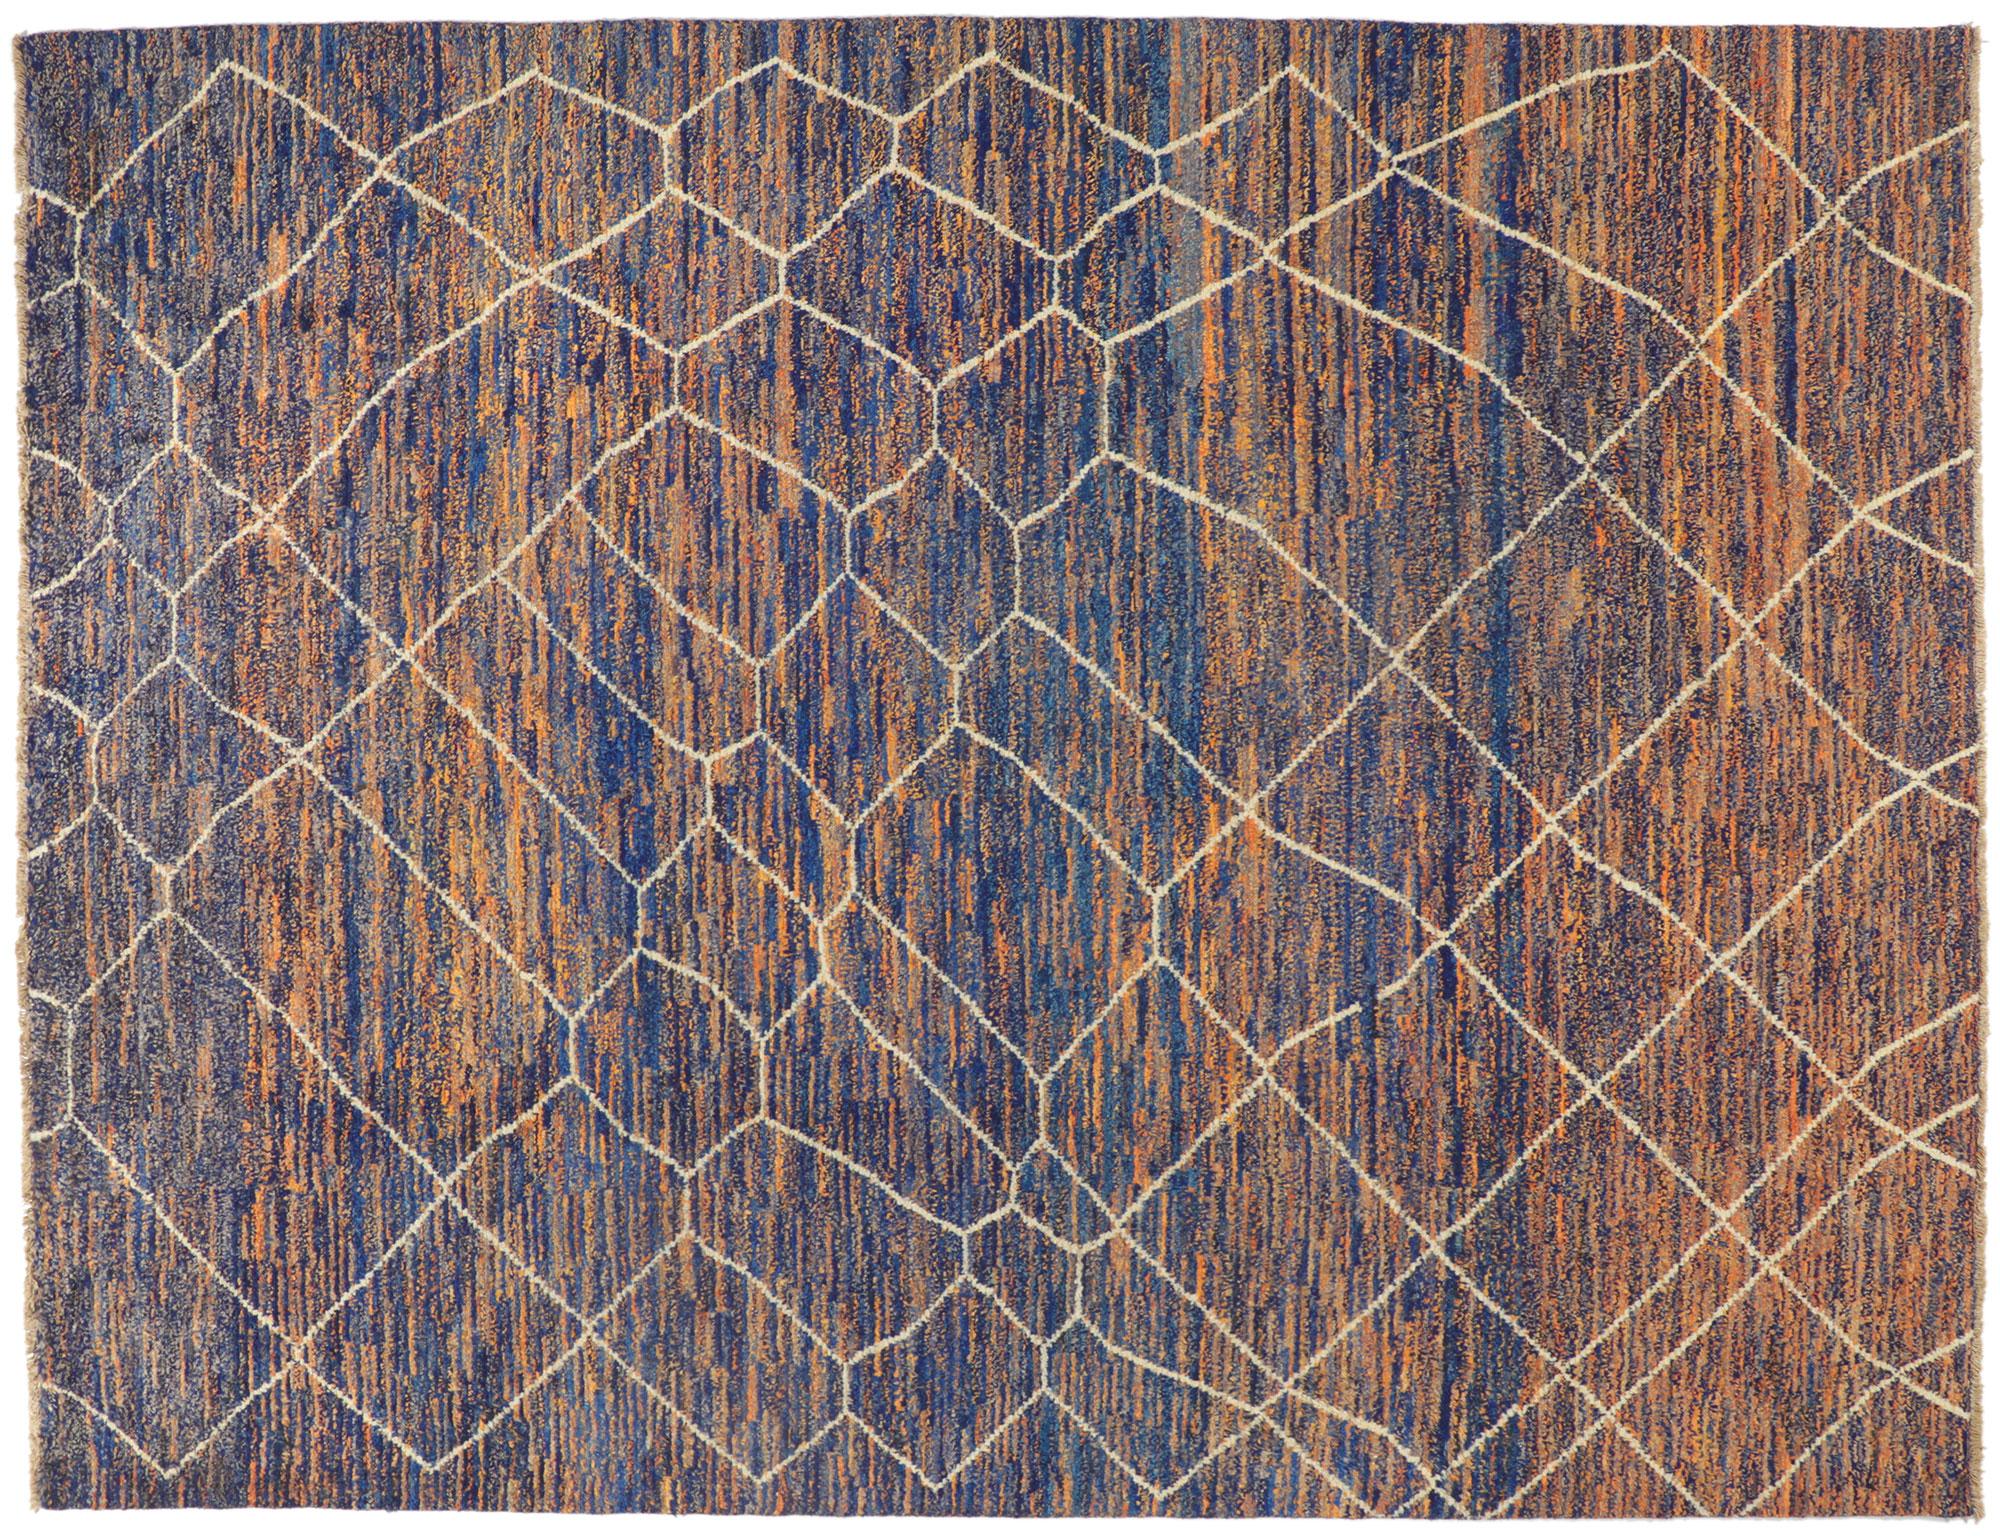 Großer abstrakter marokkanischer Teppich, neu im Angebot 2